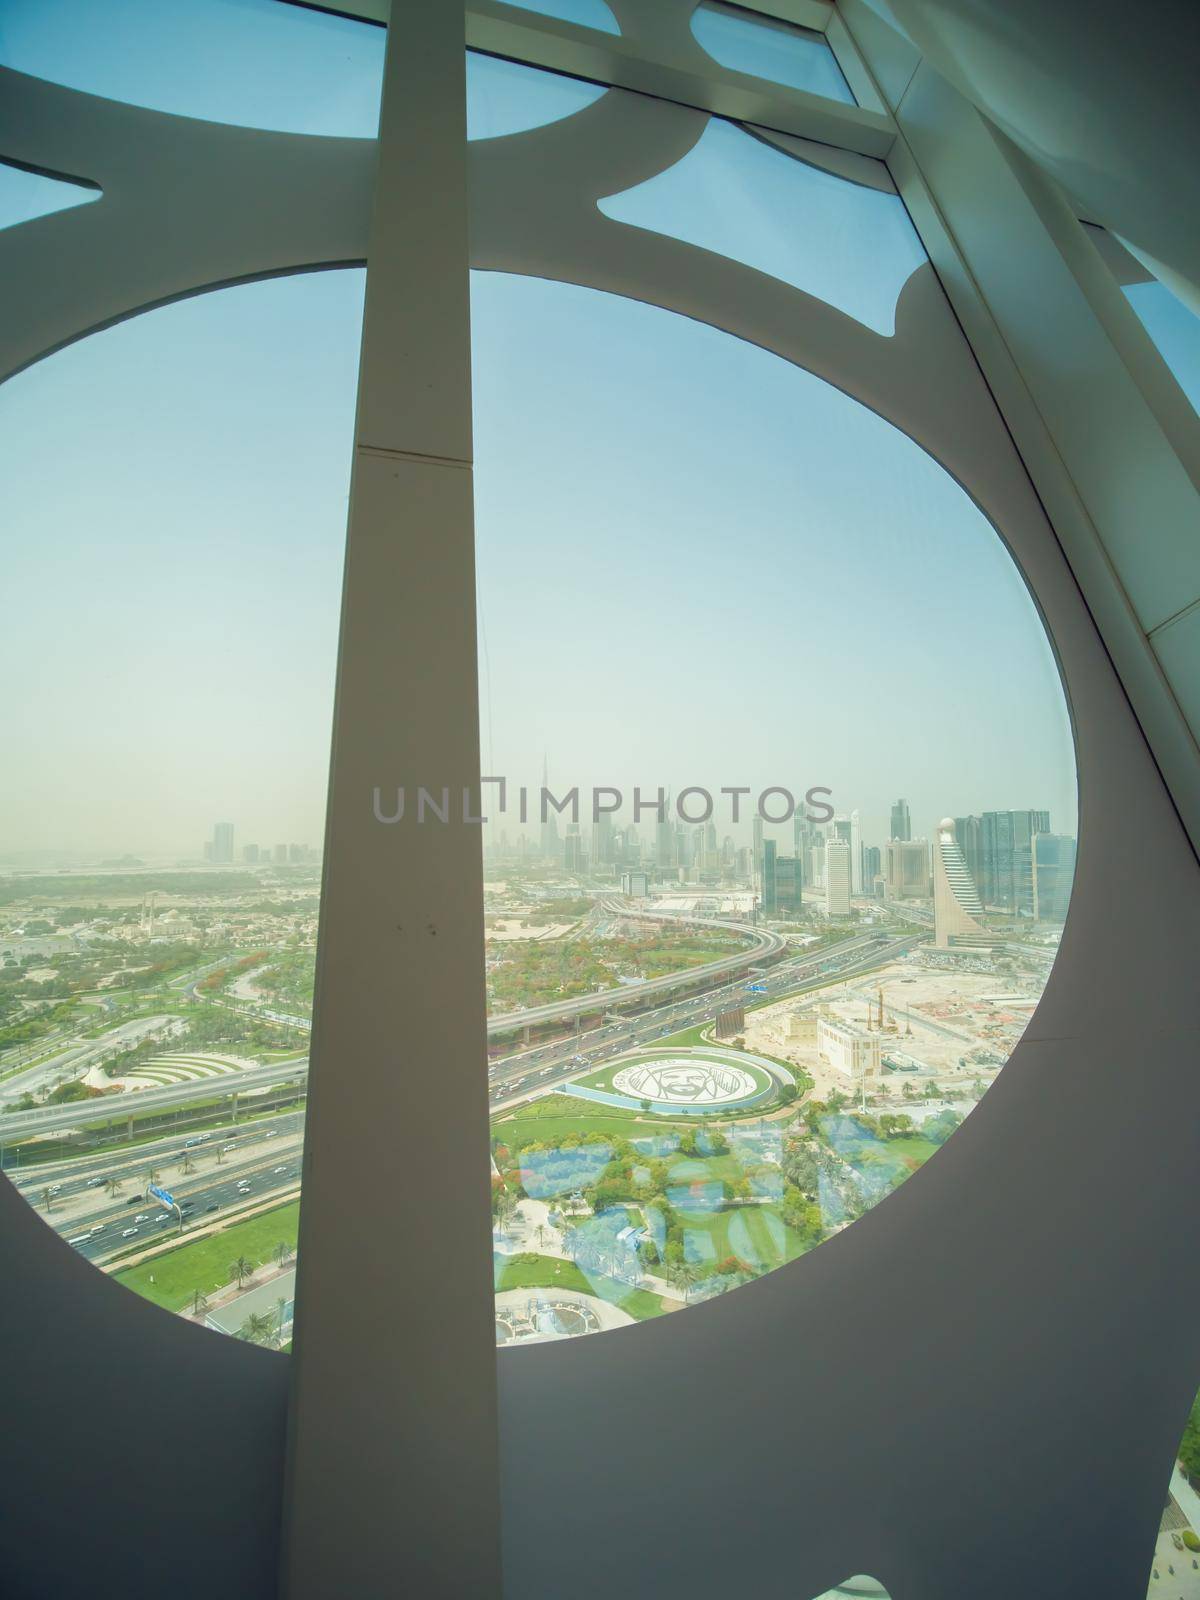 Dubai Frame is one of the latest landmark of Dubai